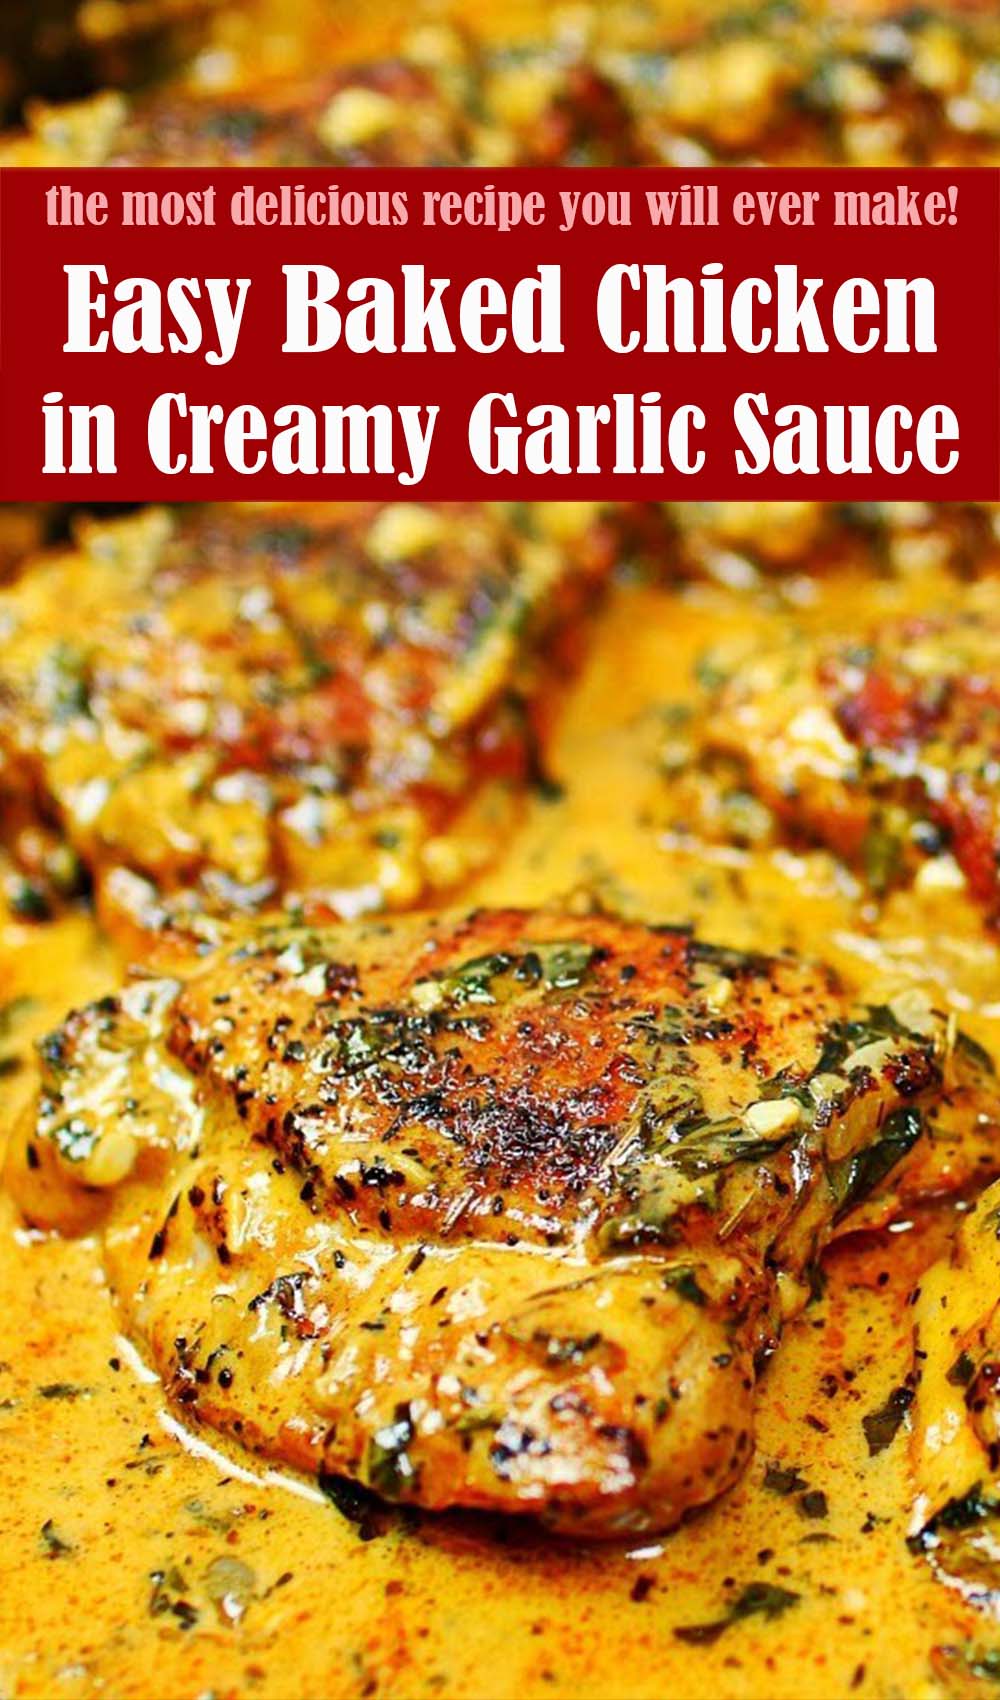 Easy Baked Chicken in Creamy Garlic Sauce